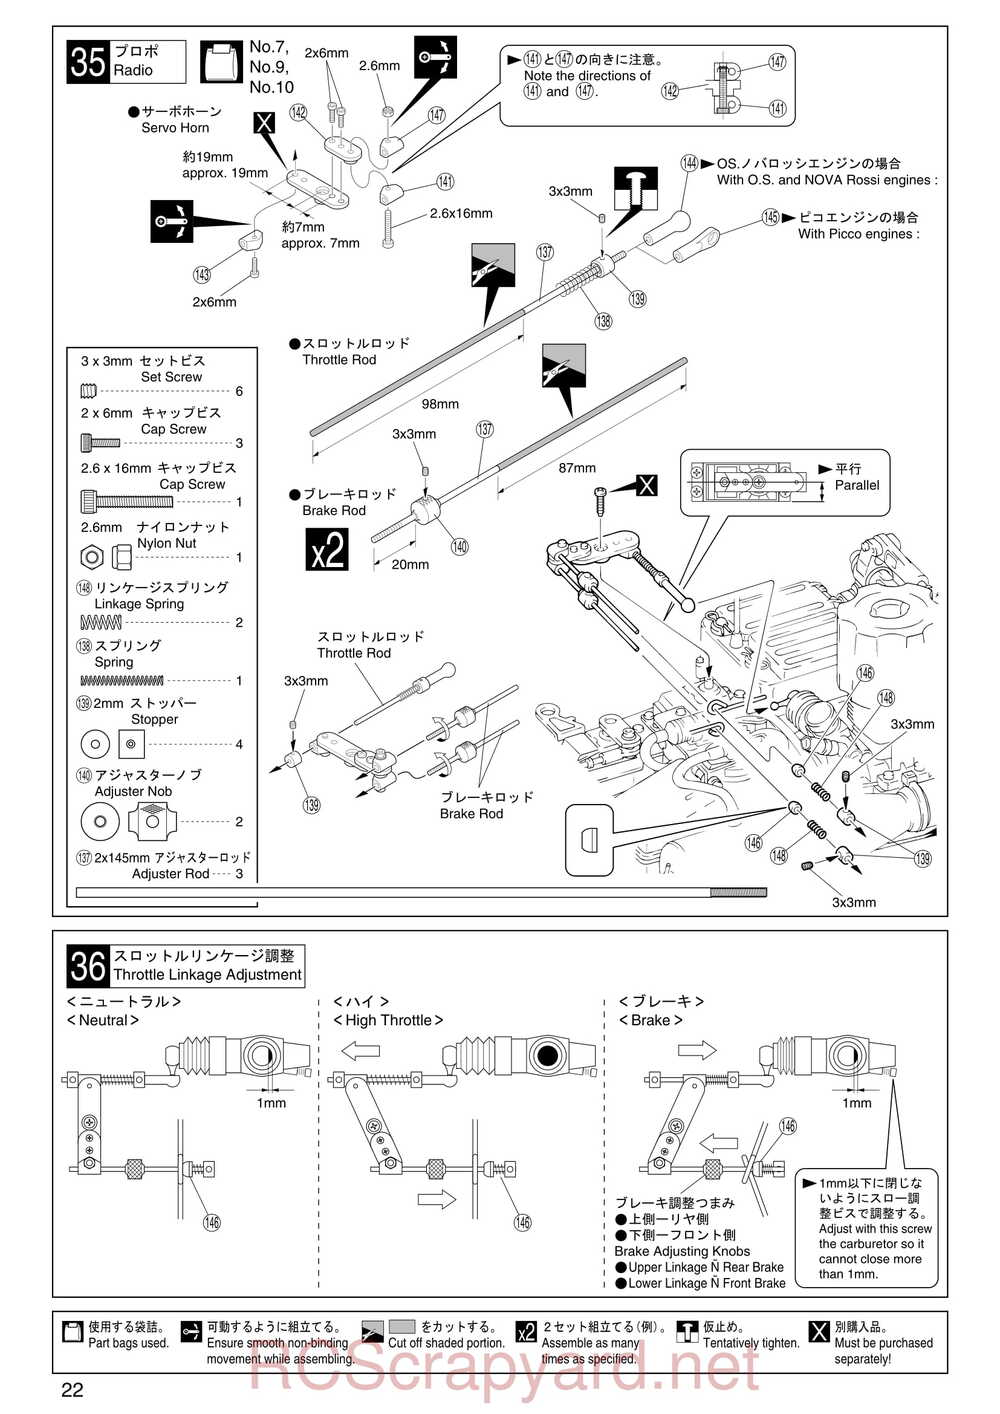 Kyosho - 31191 - Inferno-MP-7-5 Yuichi - Manual - Page 22